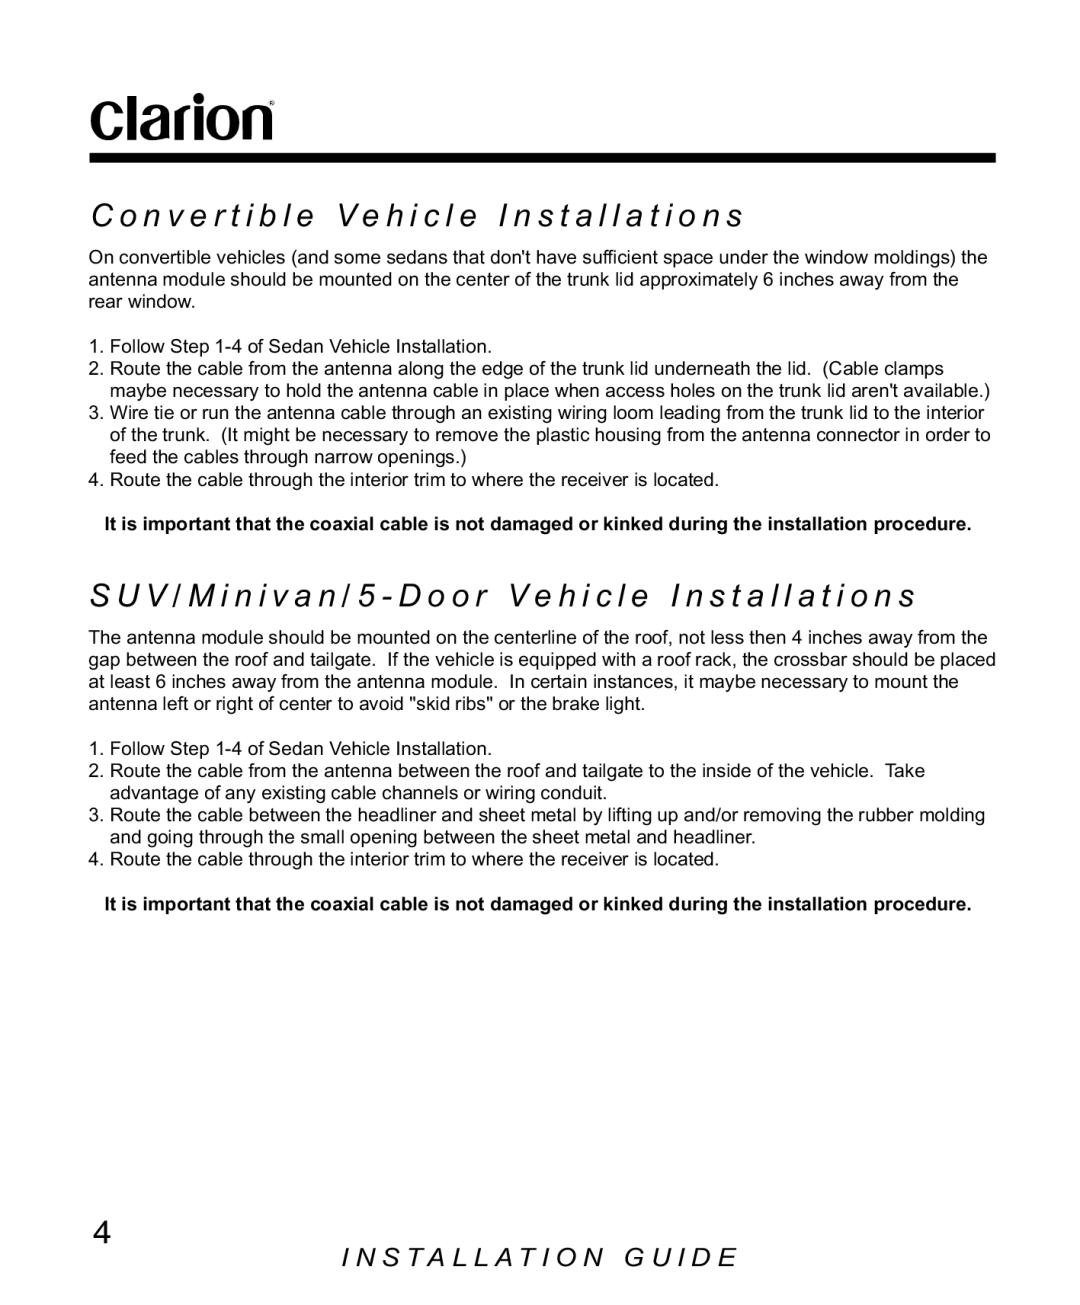 Clarion SA200 manual Follow -4of Sedan Vehicle Installation 